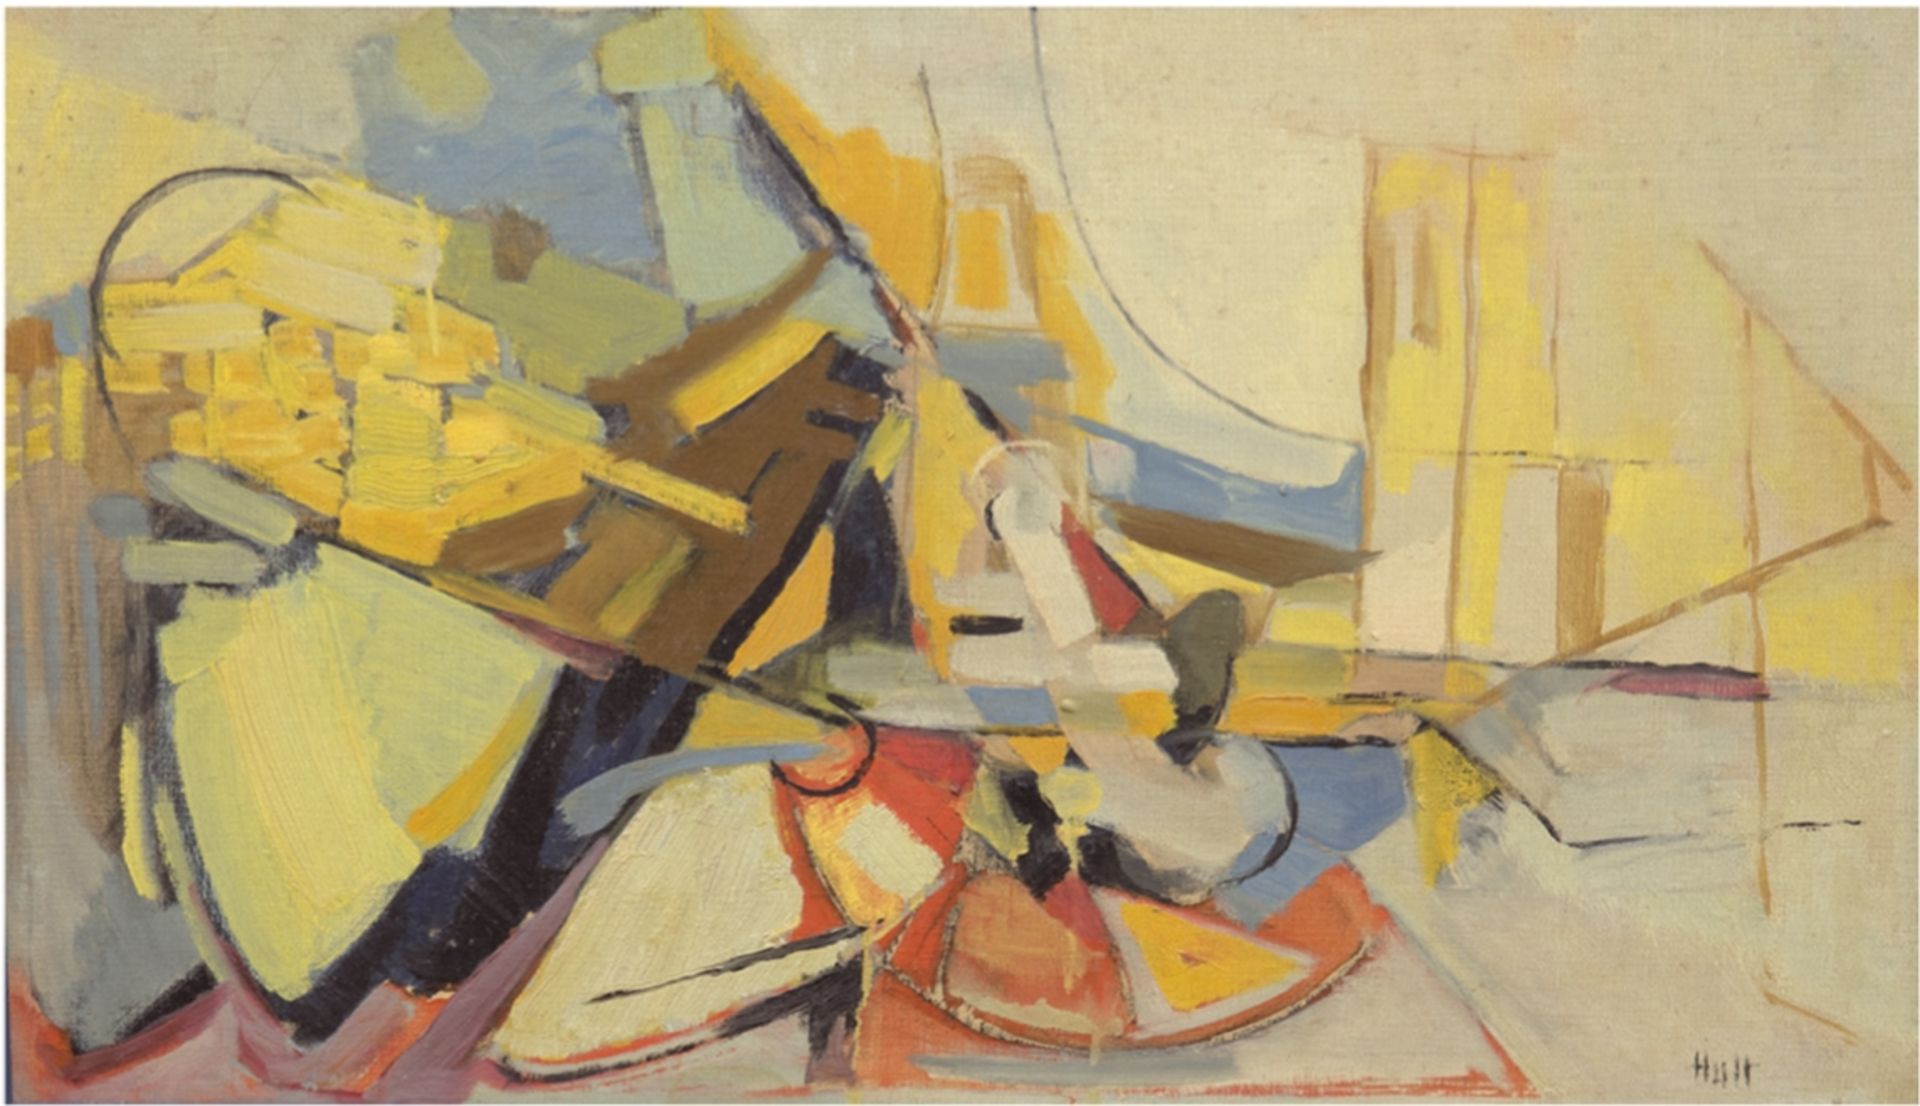 Hult, Torsten (1922-2012, Schwedischer Maler) "Abstrakte Komposition", Öl/Hf., um 1955, sign. u.r.,